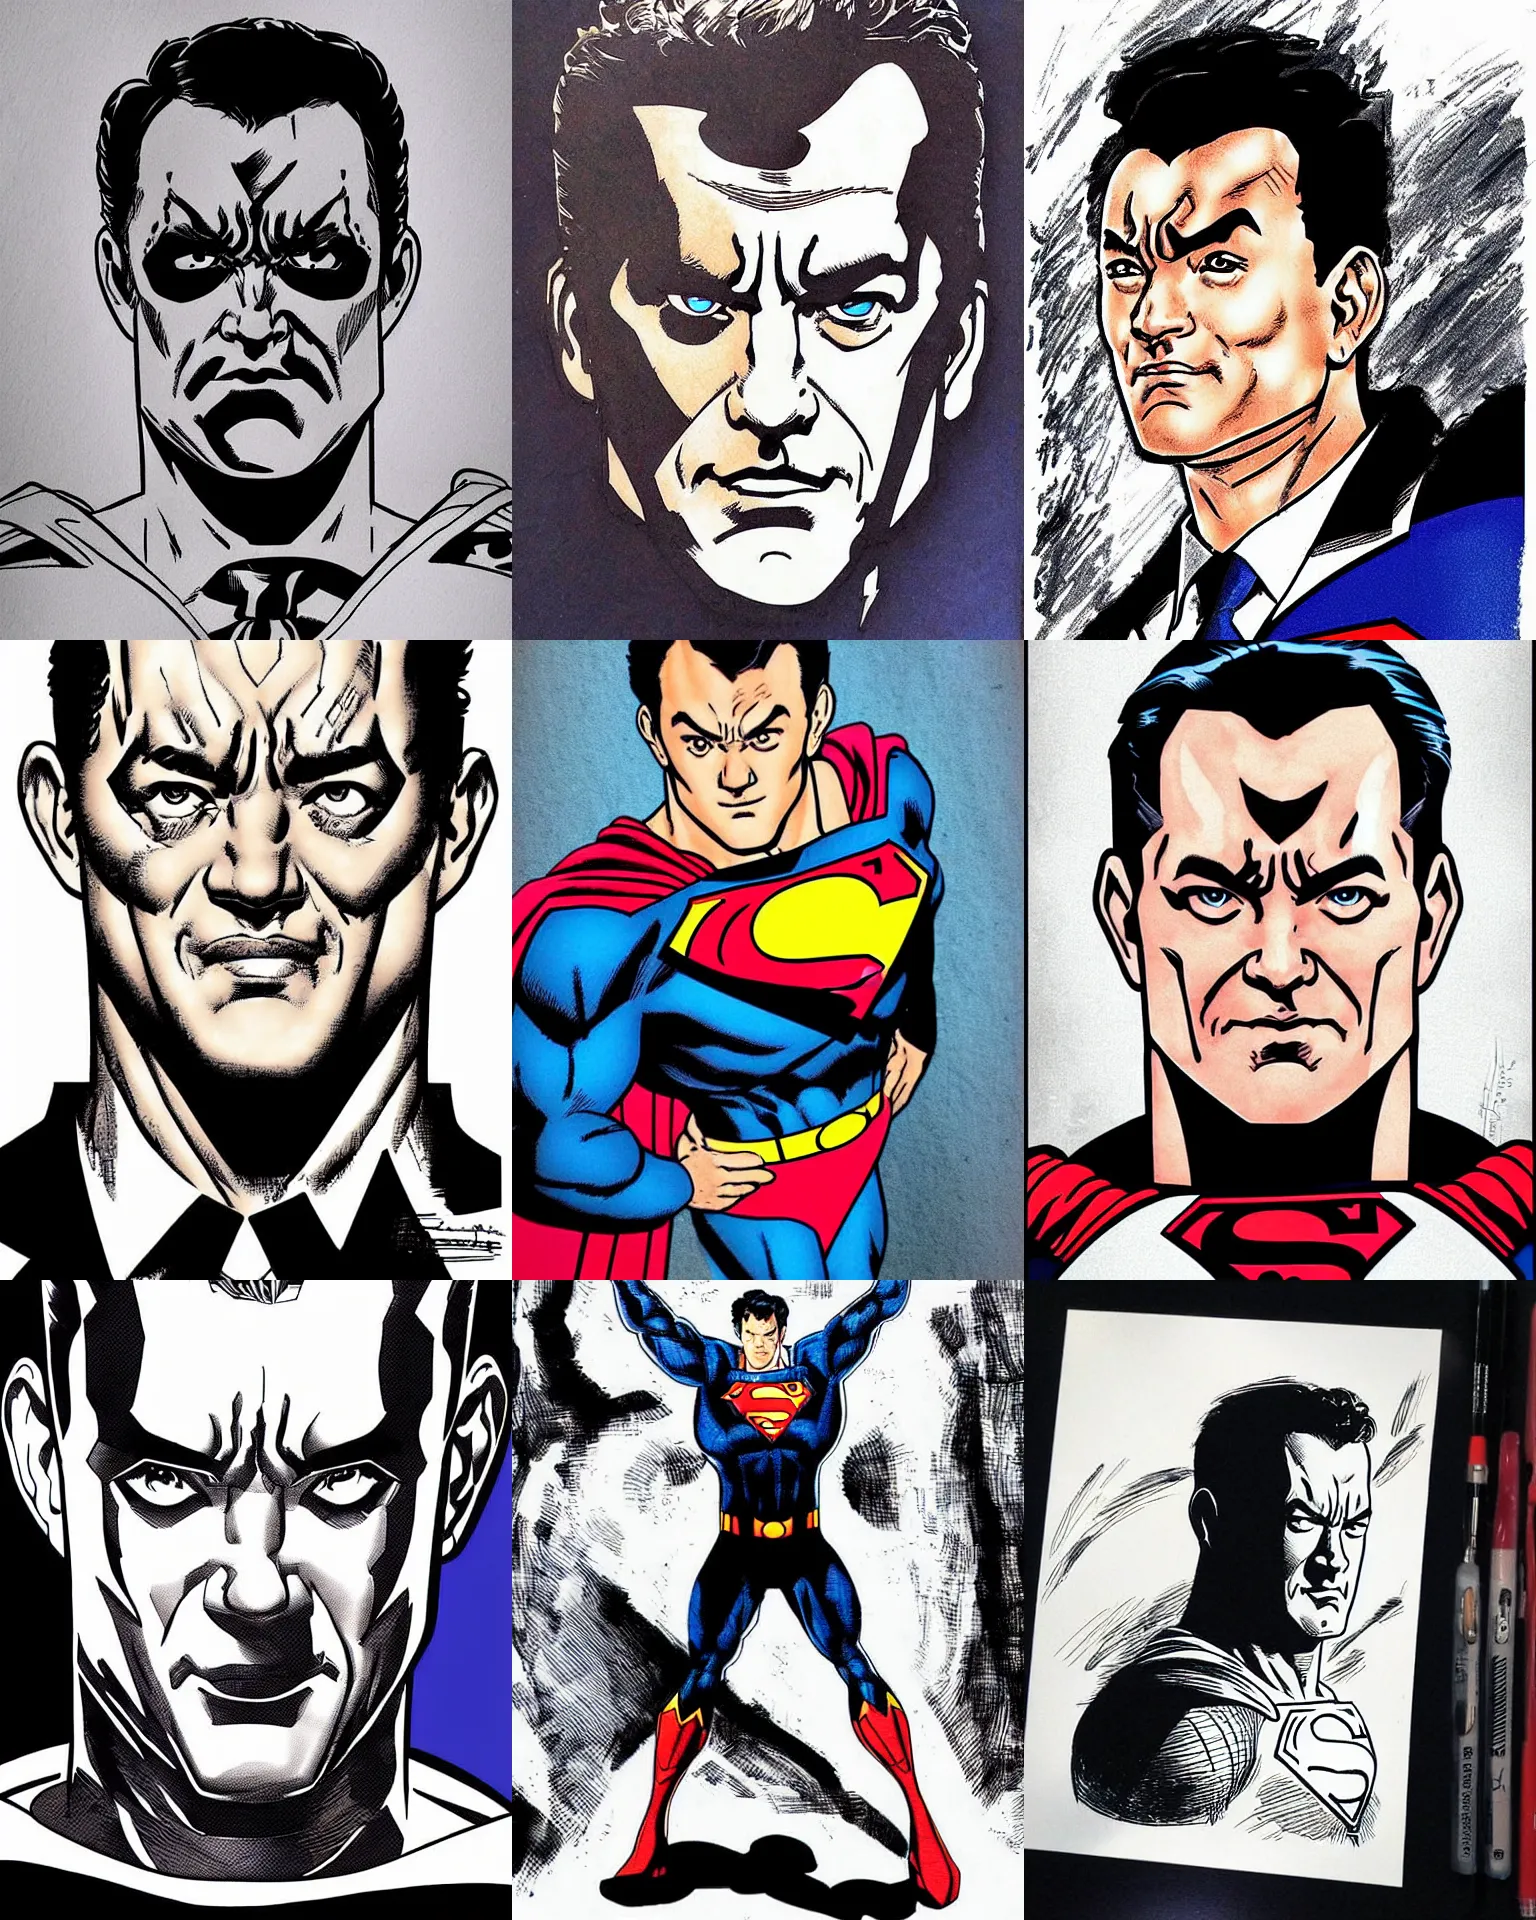 Prompt: tom hanks!!! jim lee!!! flat ink sketch by jim lee face close up headshot superman costume in the style of jim lee, x - men superhero comic book character by jim lee